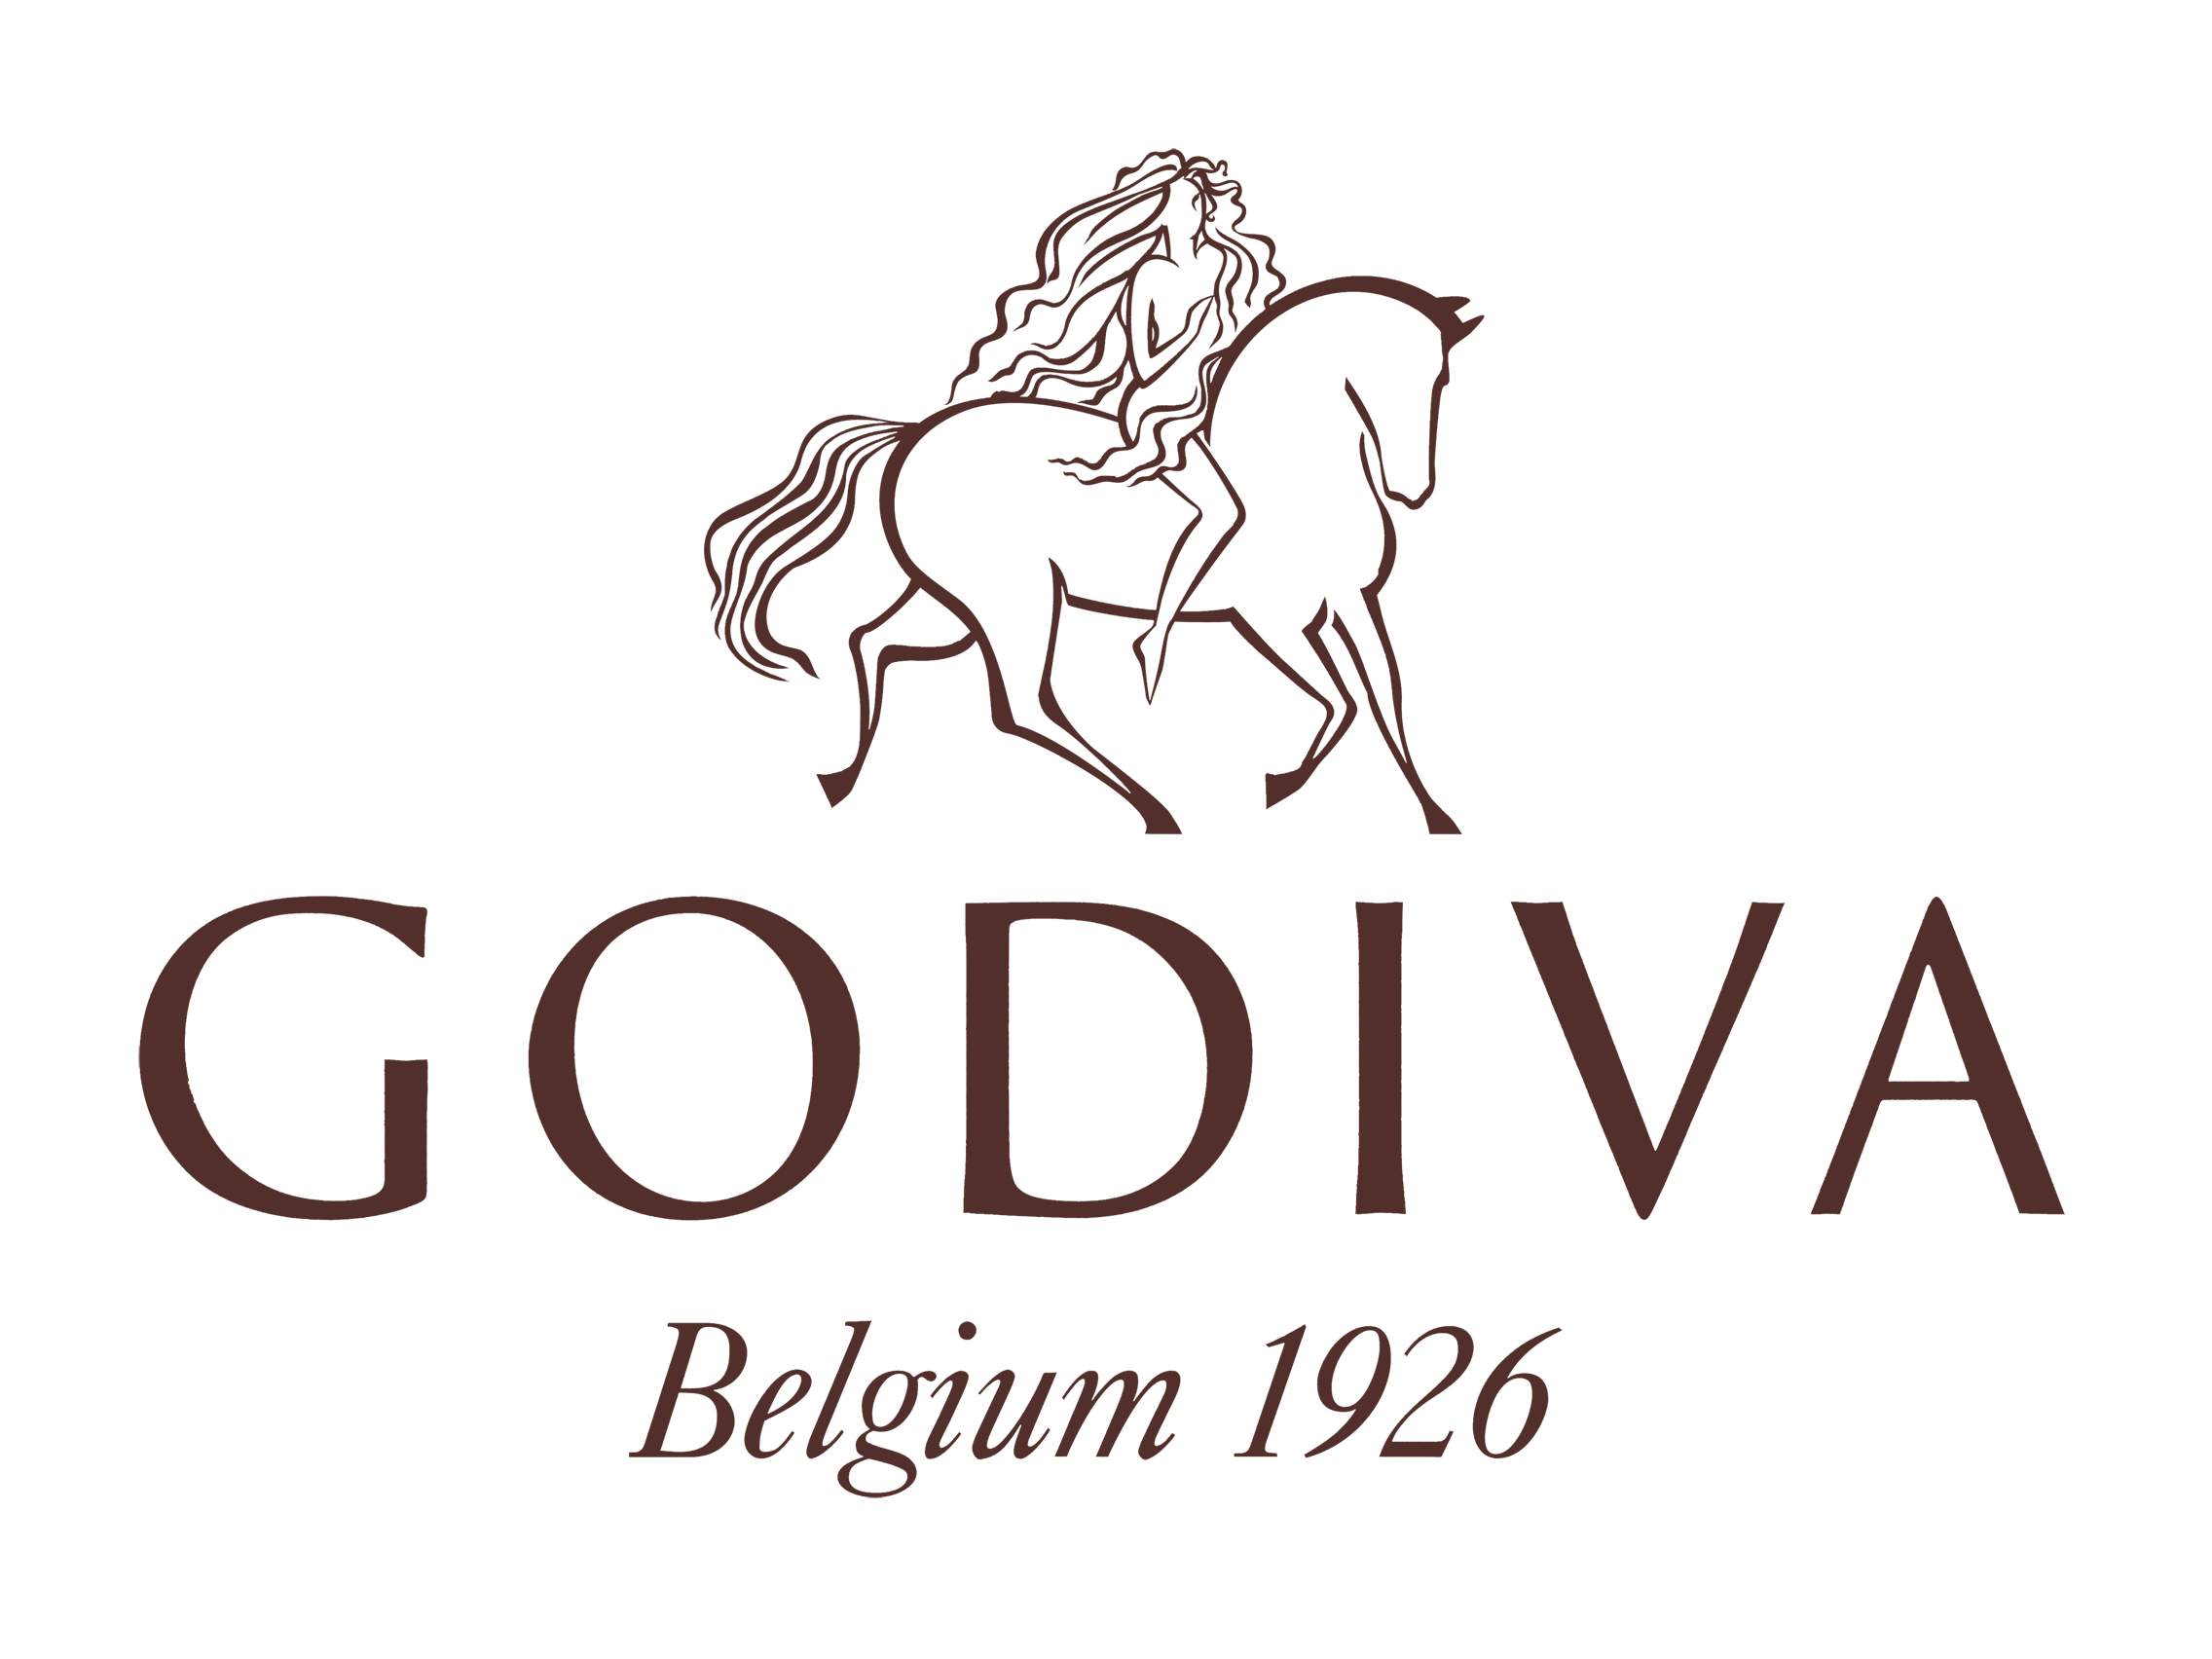 Godiva Chocolatier Logo